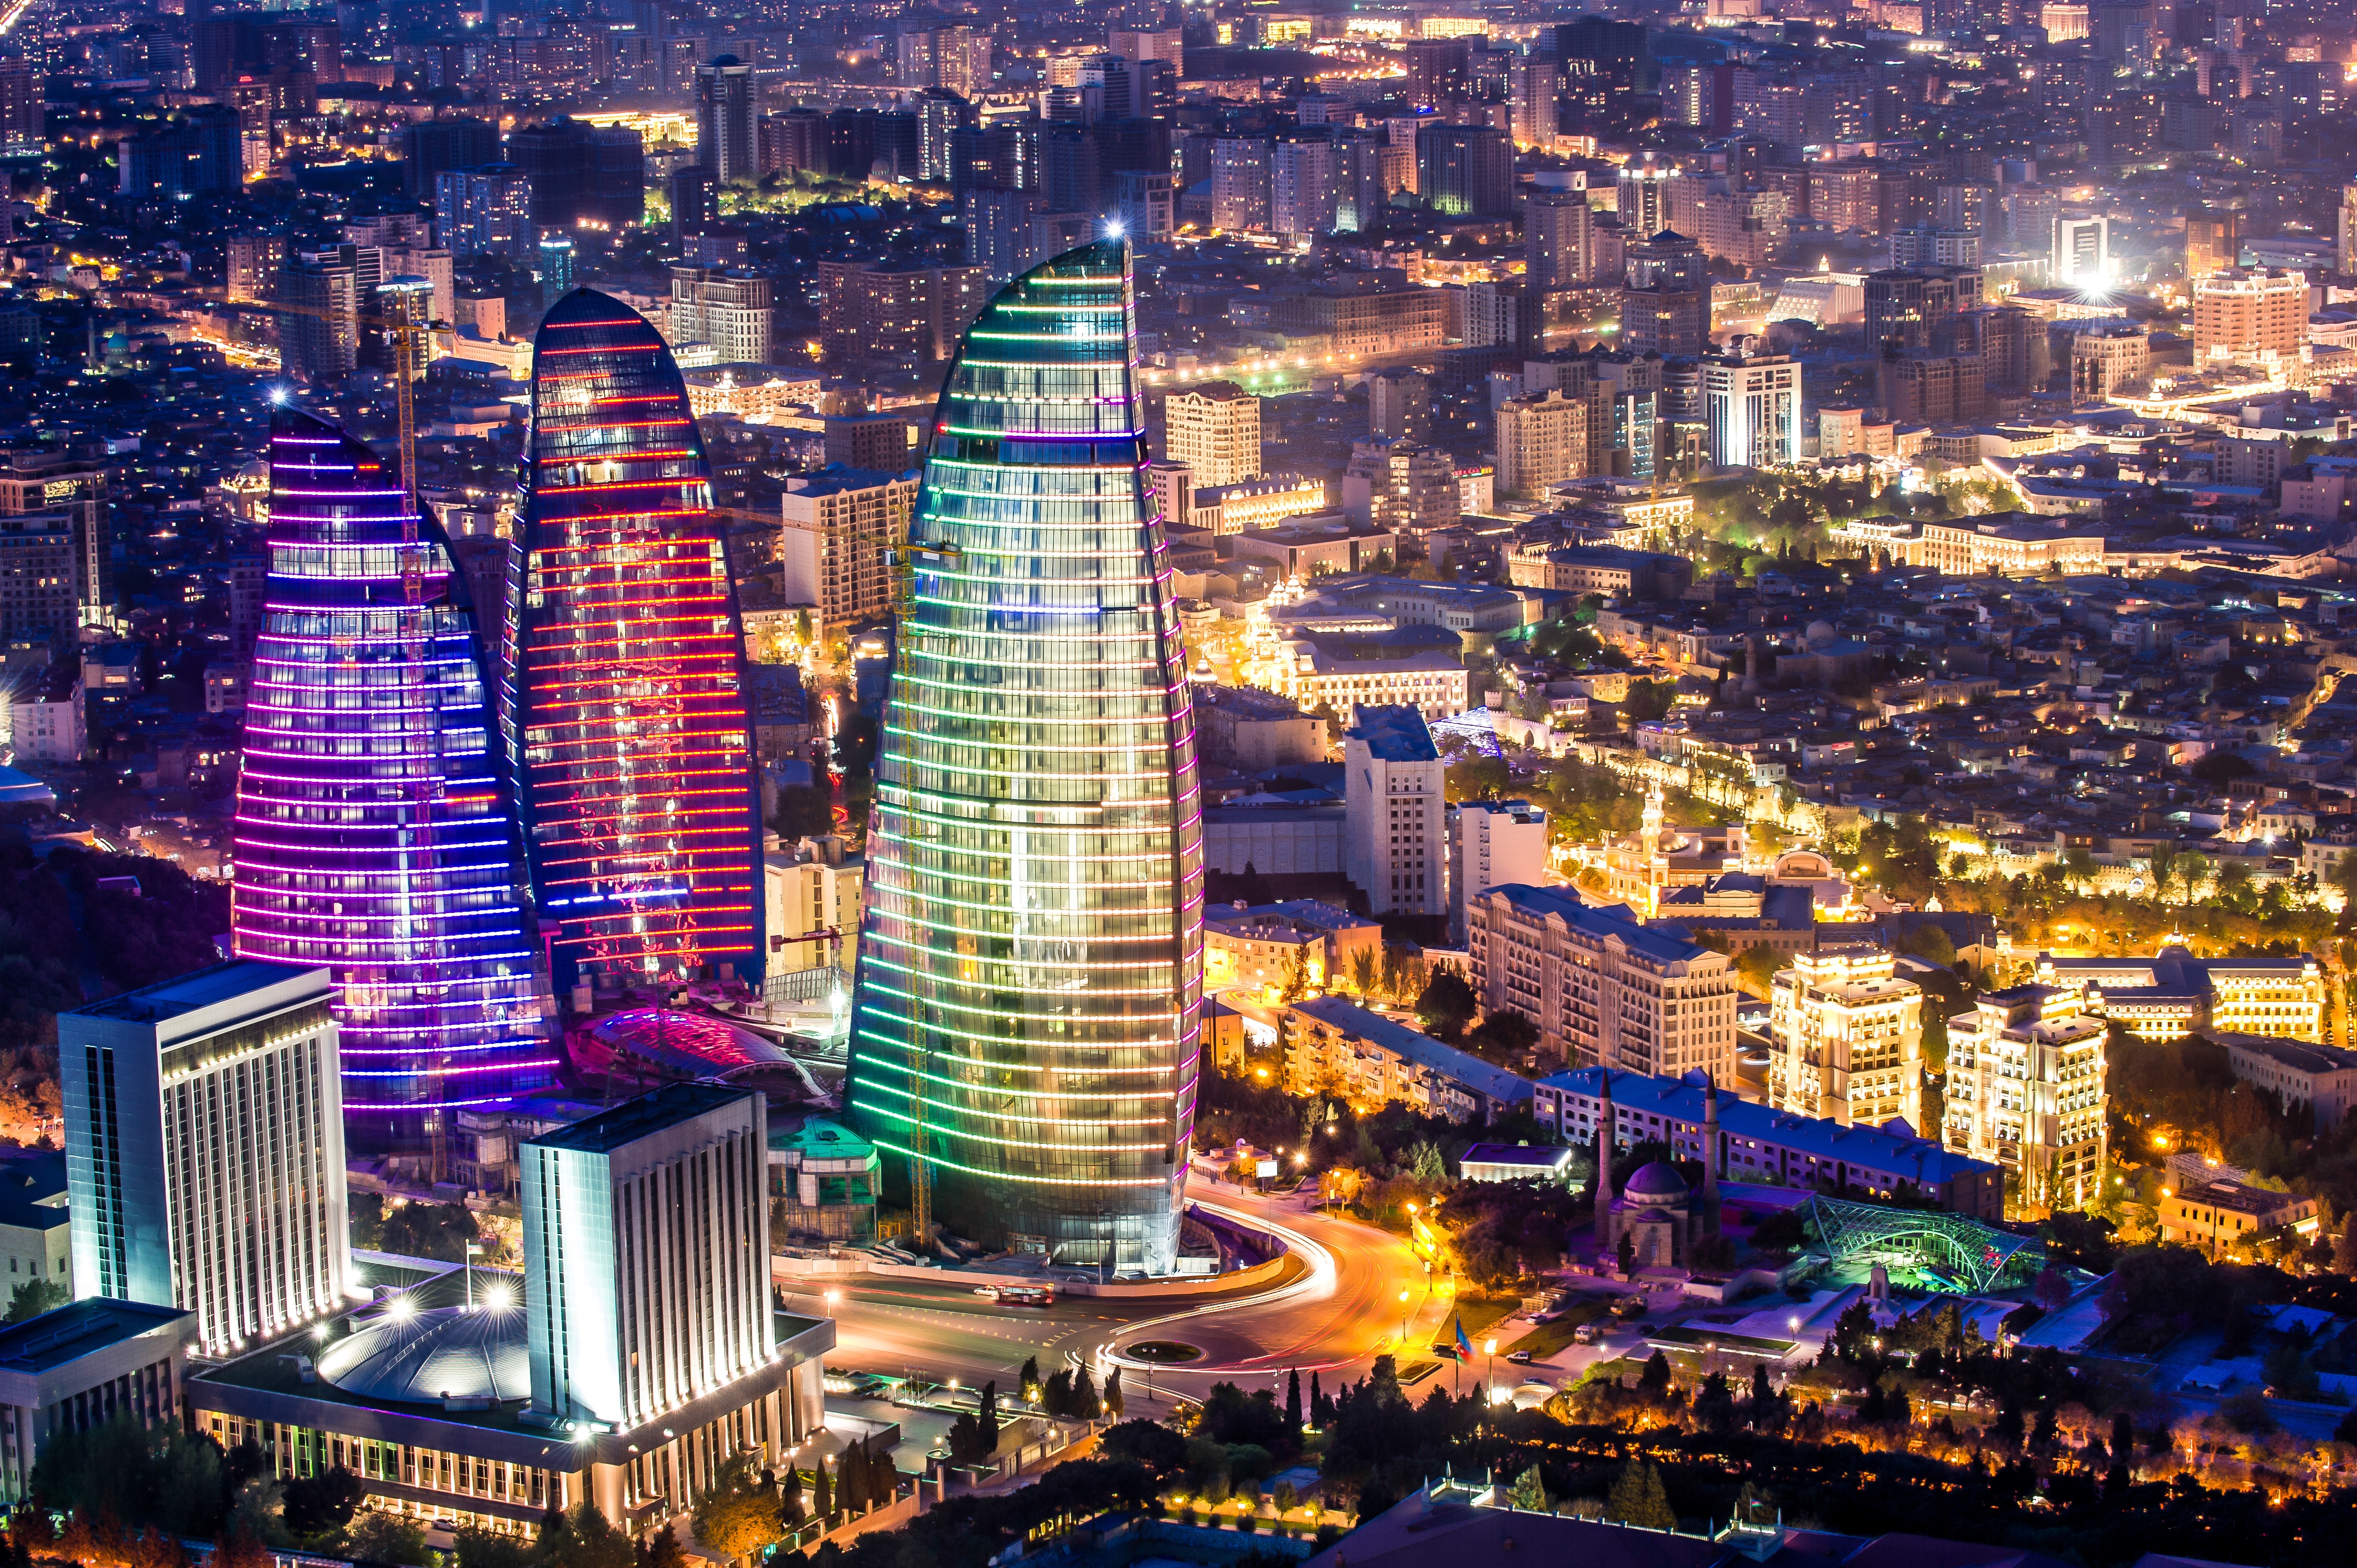 Baku Flame Towers 4k Ultra HD Wallpaper Background Image